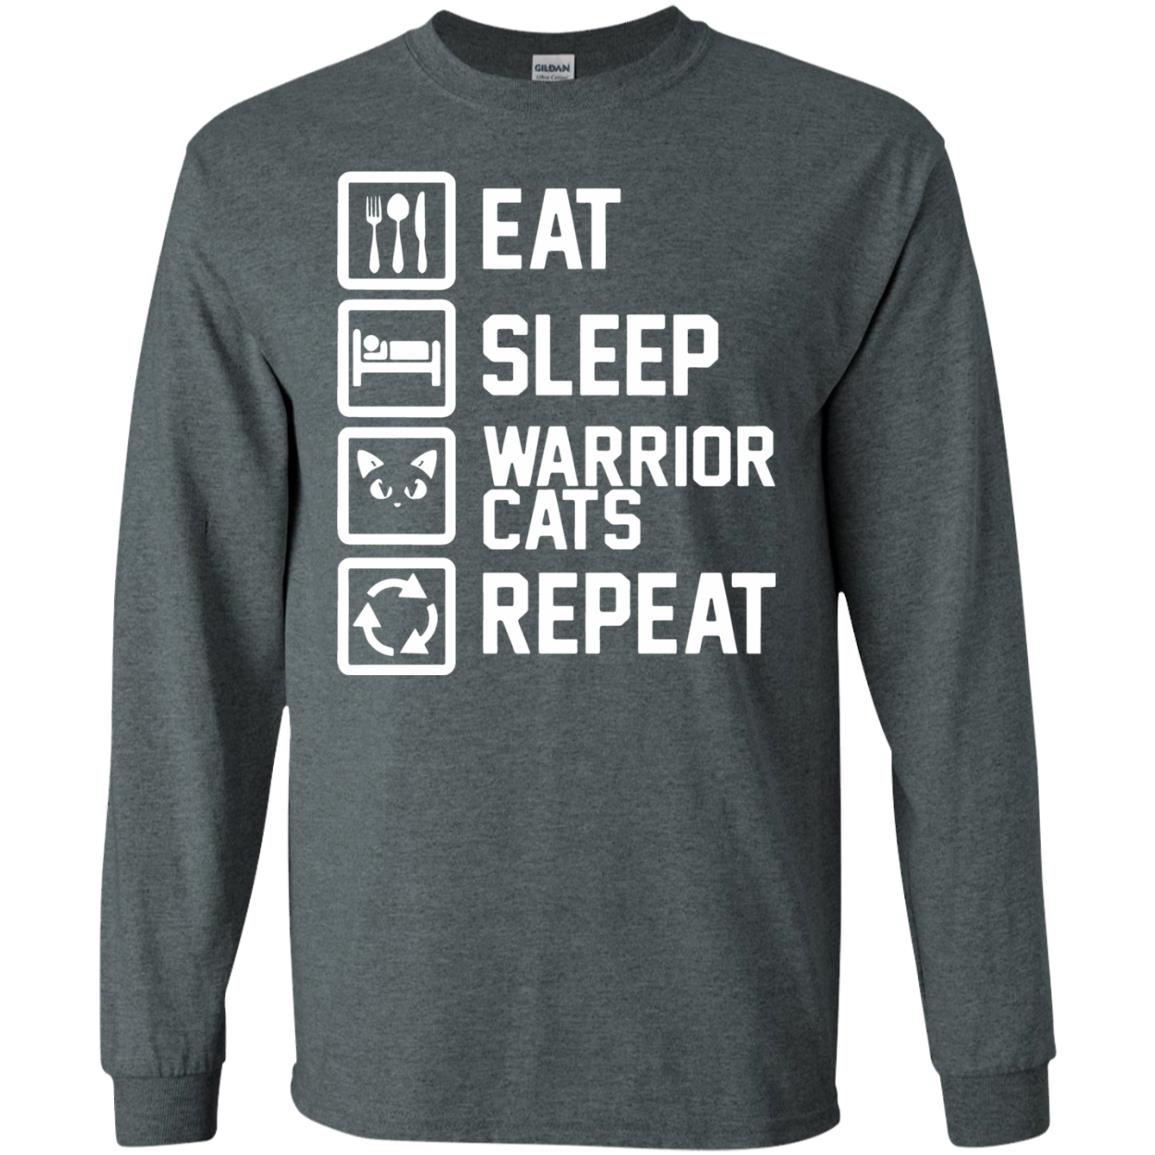 Eat Sleep Warrior Cats Repeat Shirt